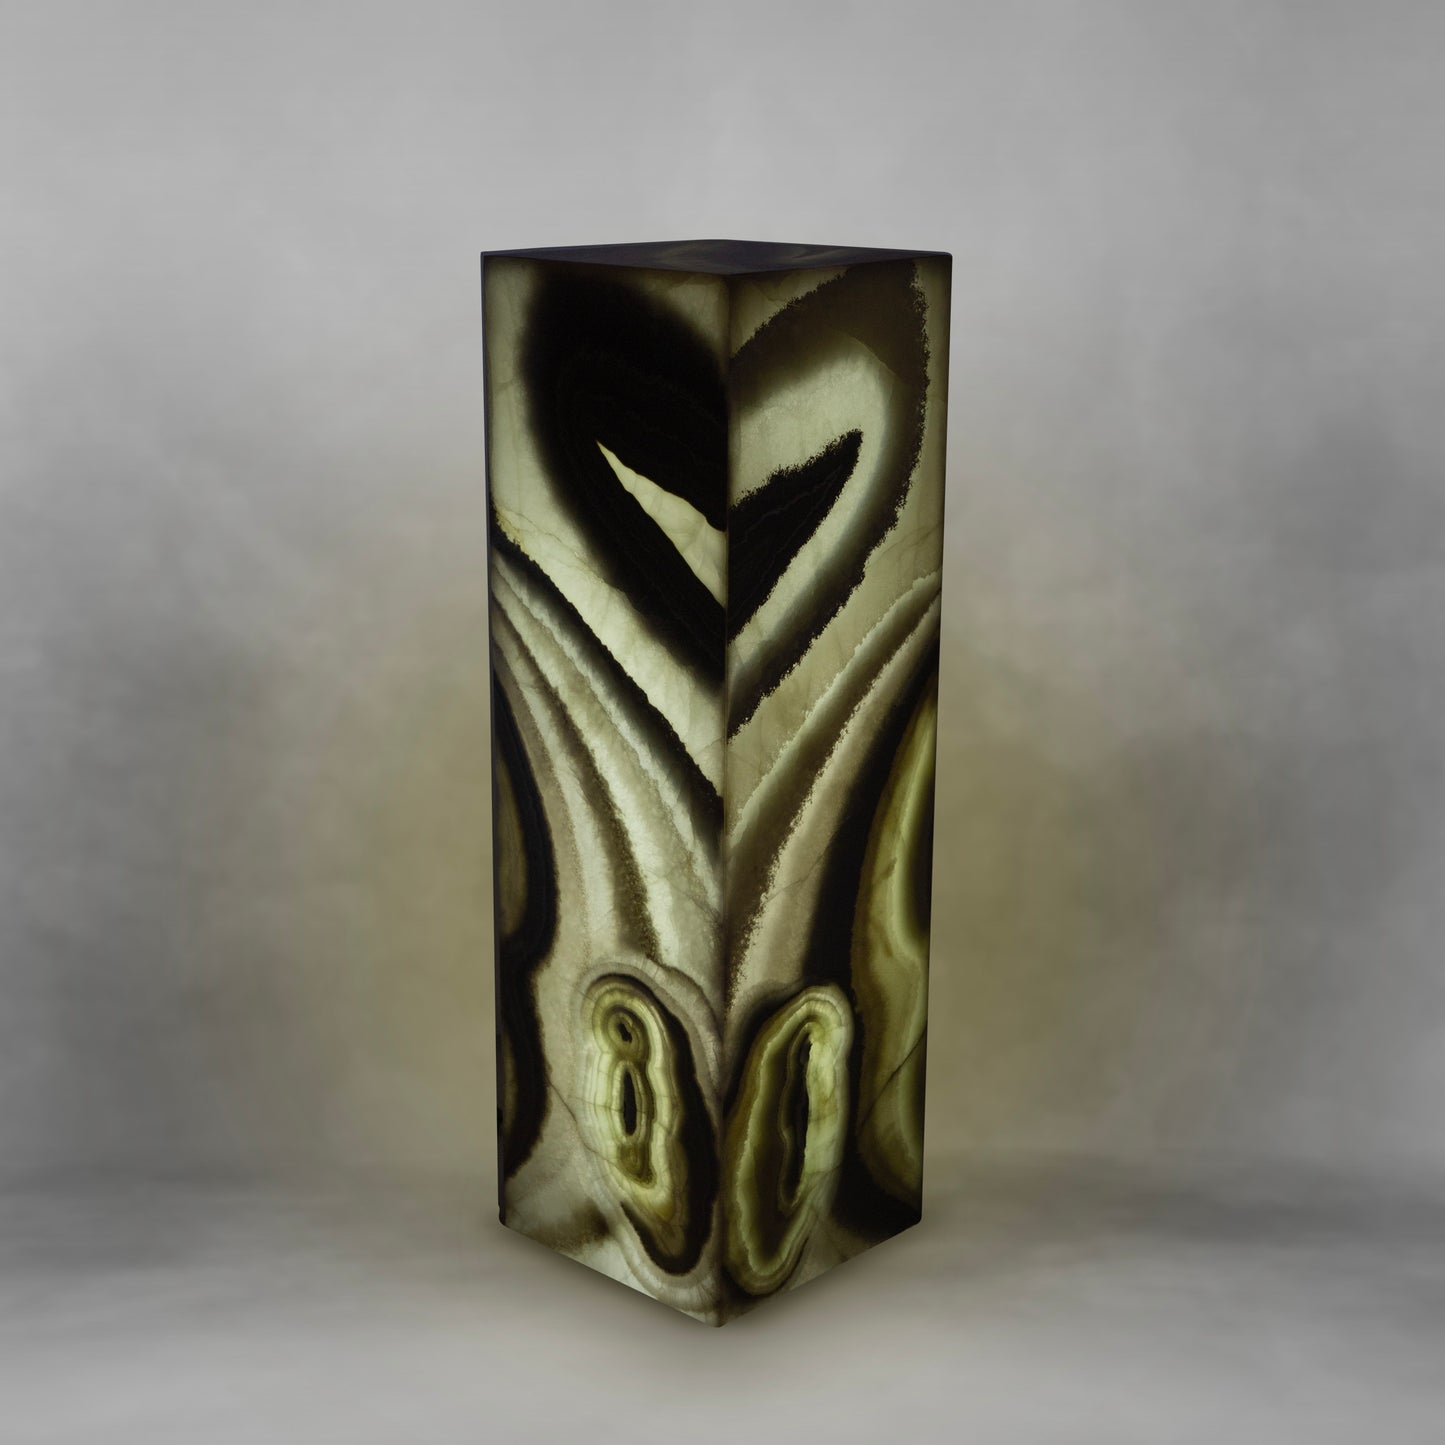 Abstract design in grays, unique onyx floor lamp